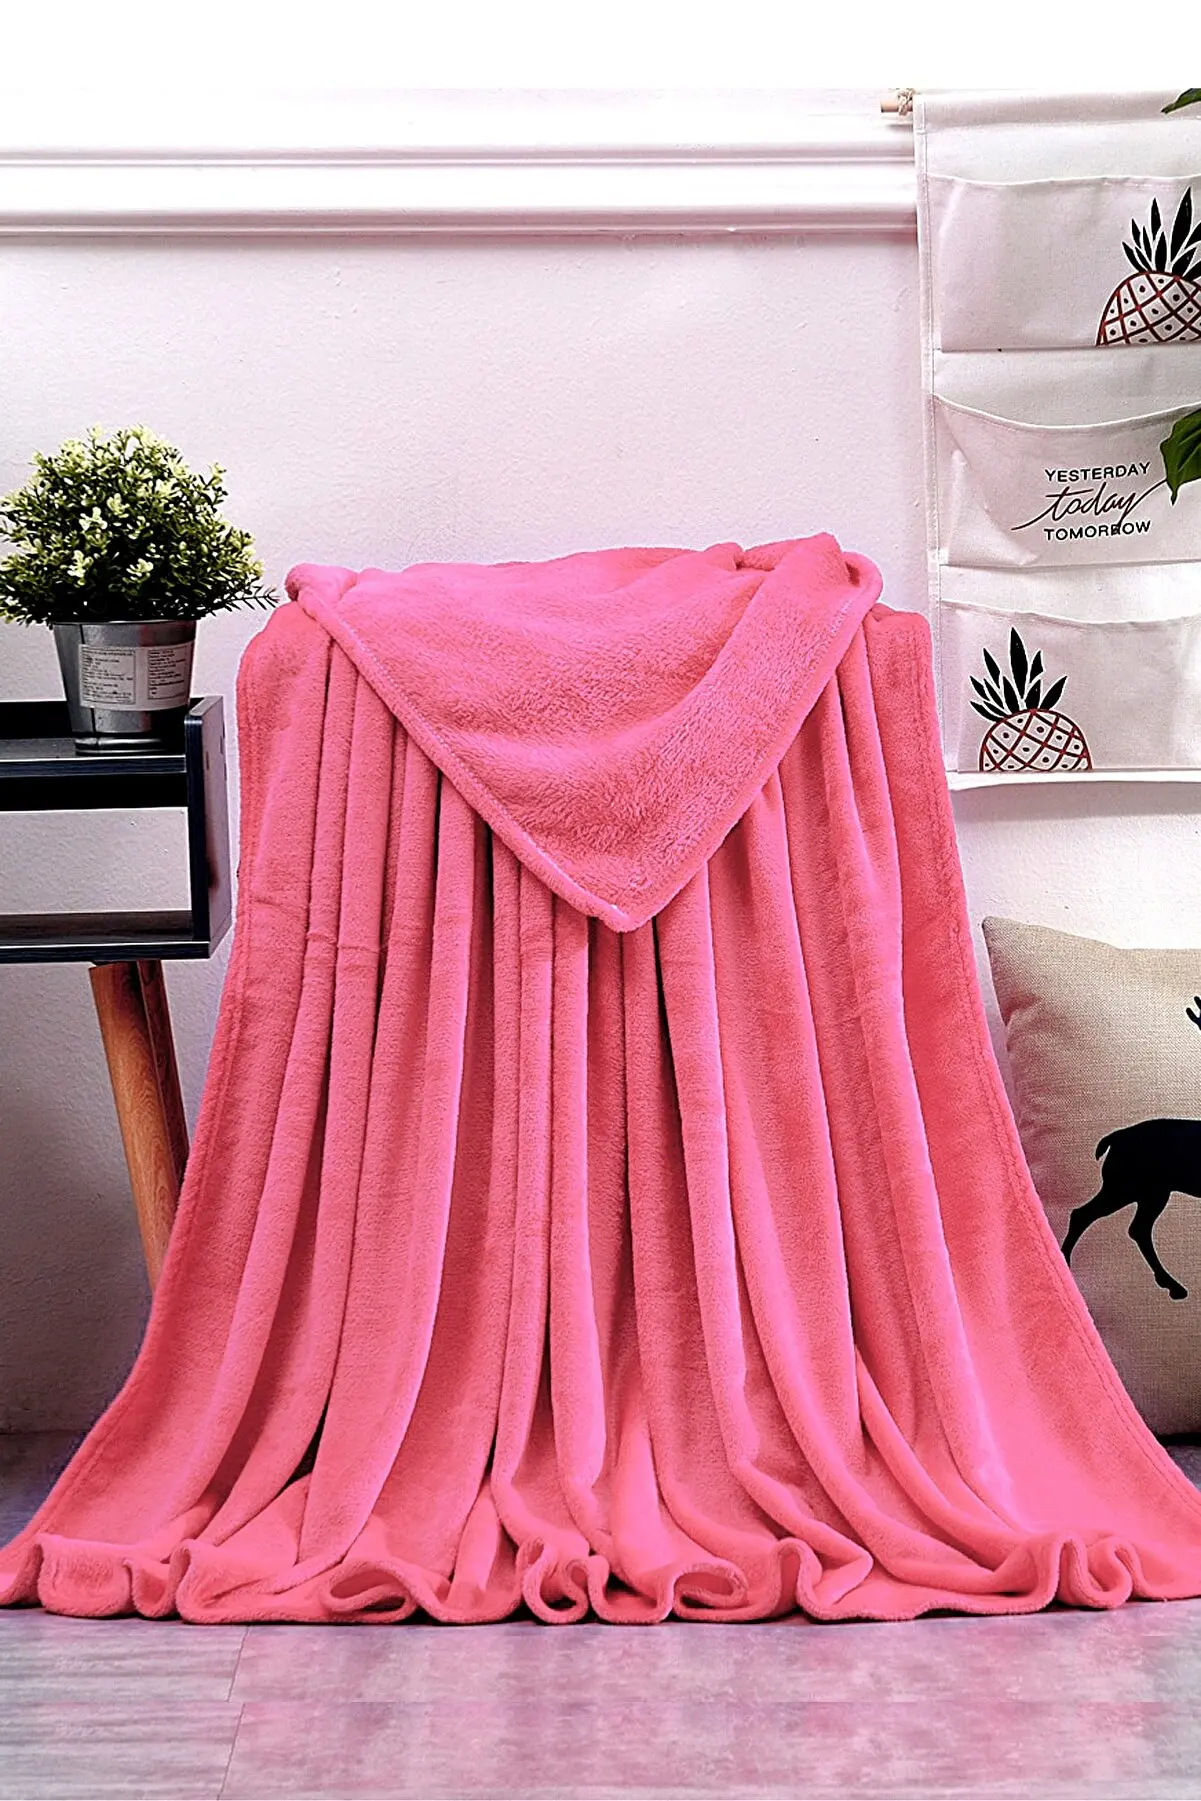 TV Blanket 170x230cm Pink Double Wellsoft Plush Blanket Polar Fluffy Soft Casual Sofa TV Room Decor Bed Bedspread Quilt Blankets